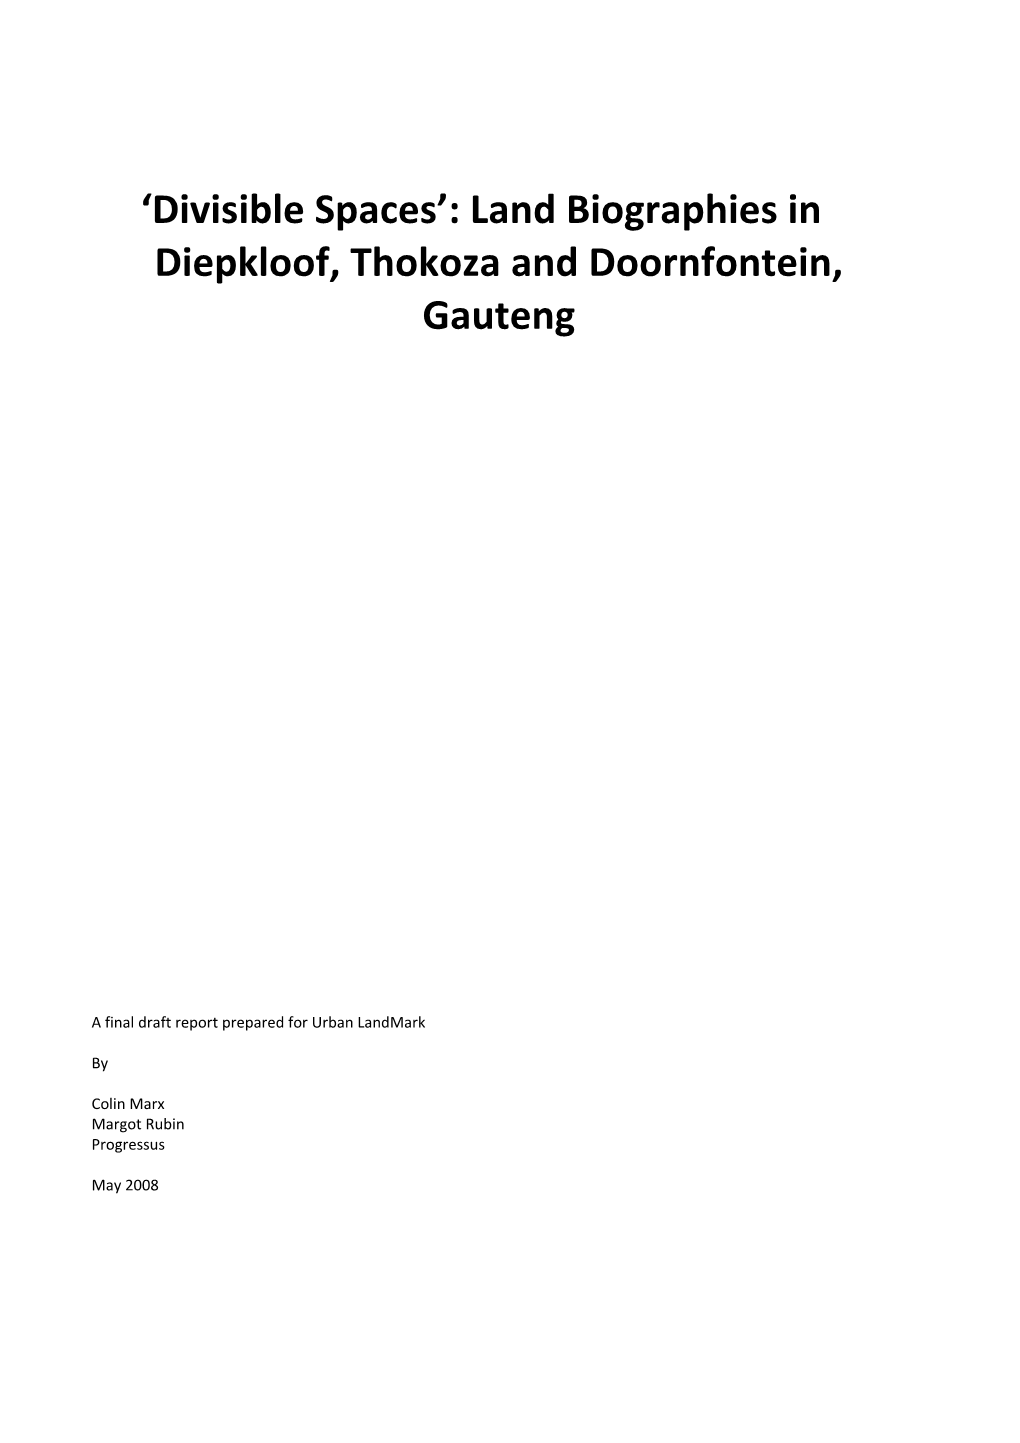 Land Biographies in Diepkloof, Thokoza and Doornfontein, Gauteng